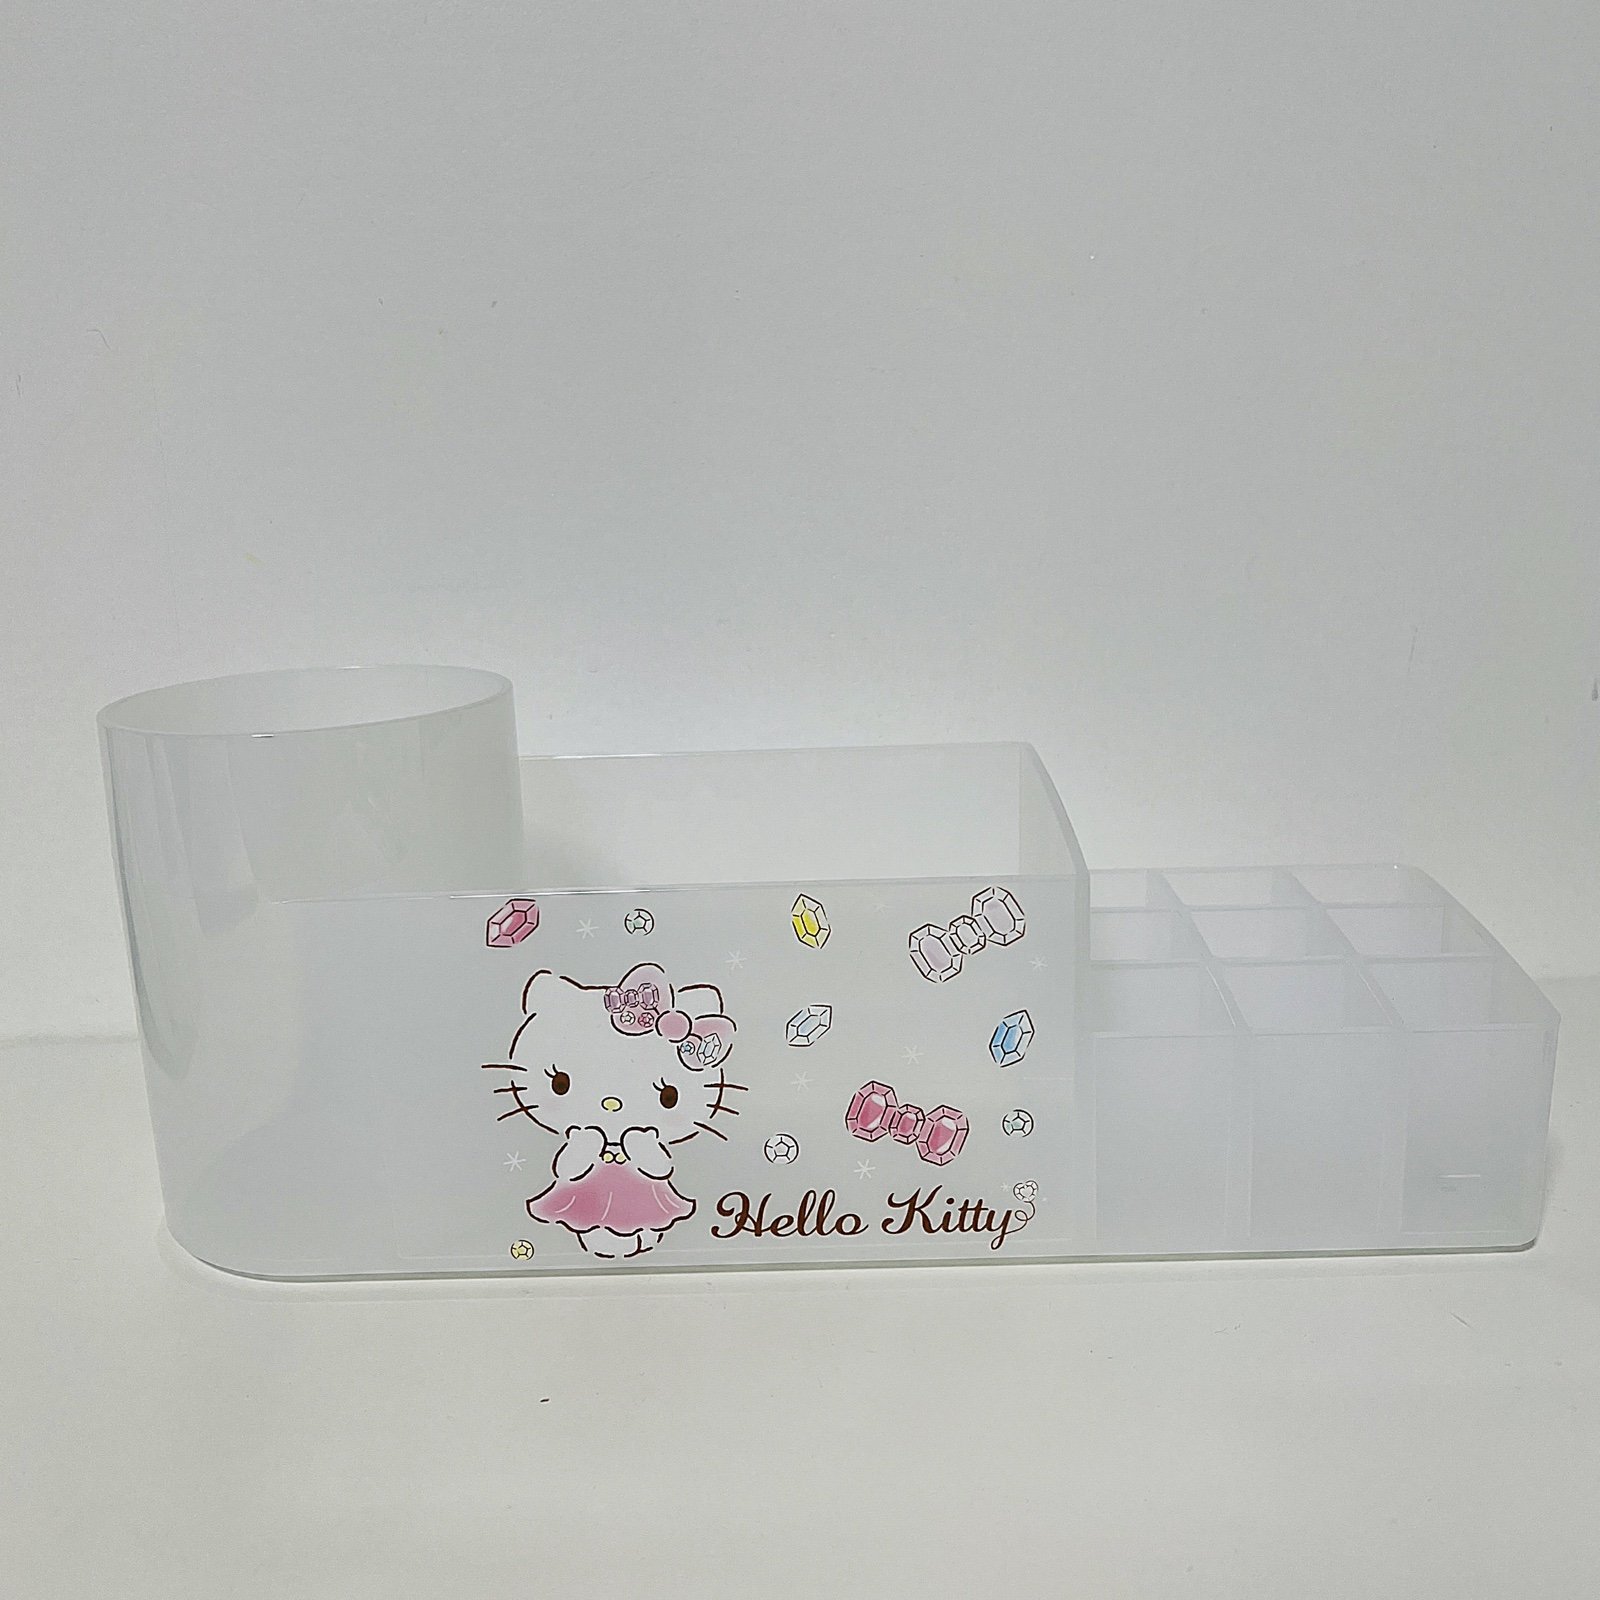 Sanrio Hello Kitty cosmetics storage box/ organizer cqWYlgSJU